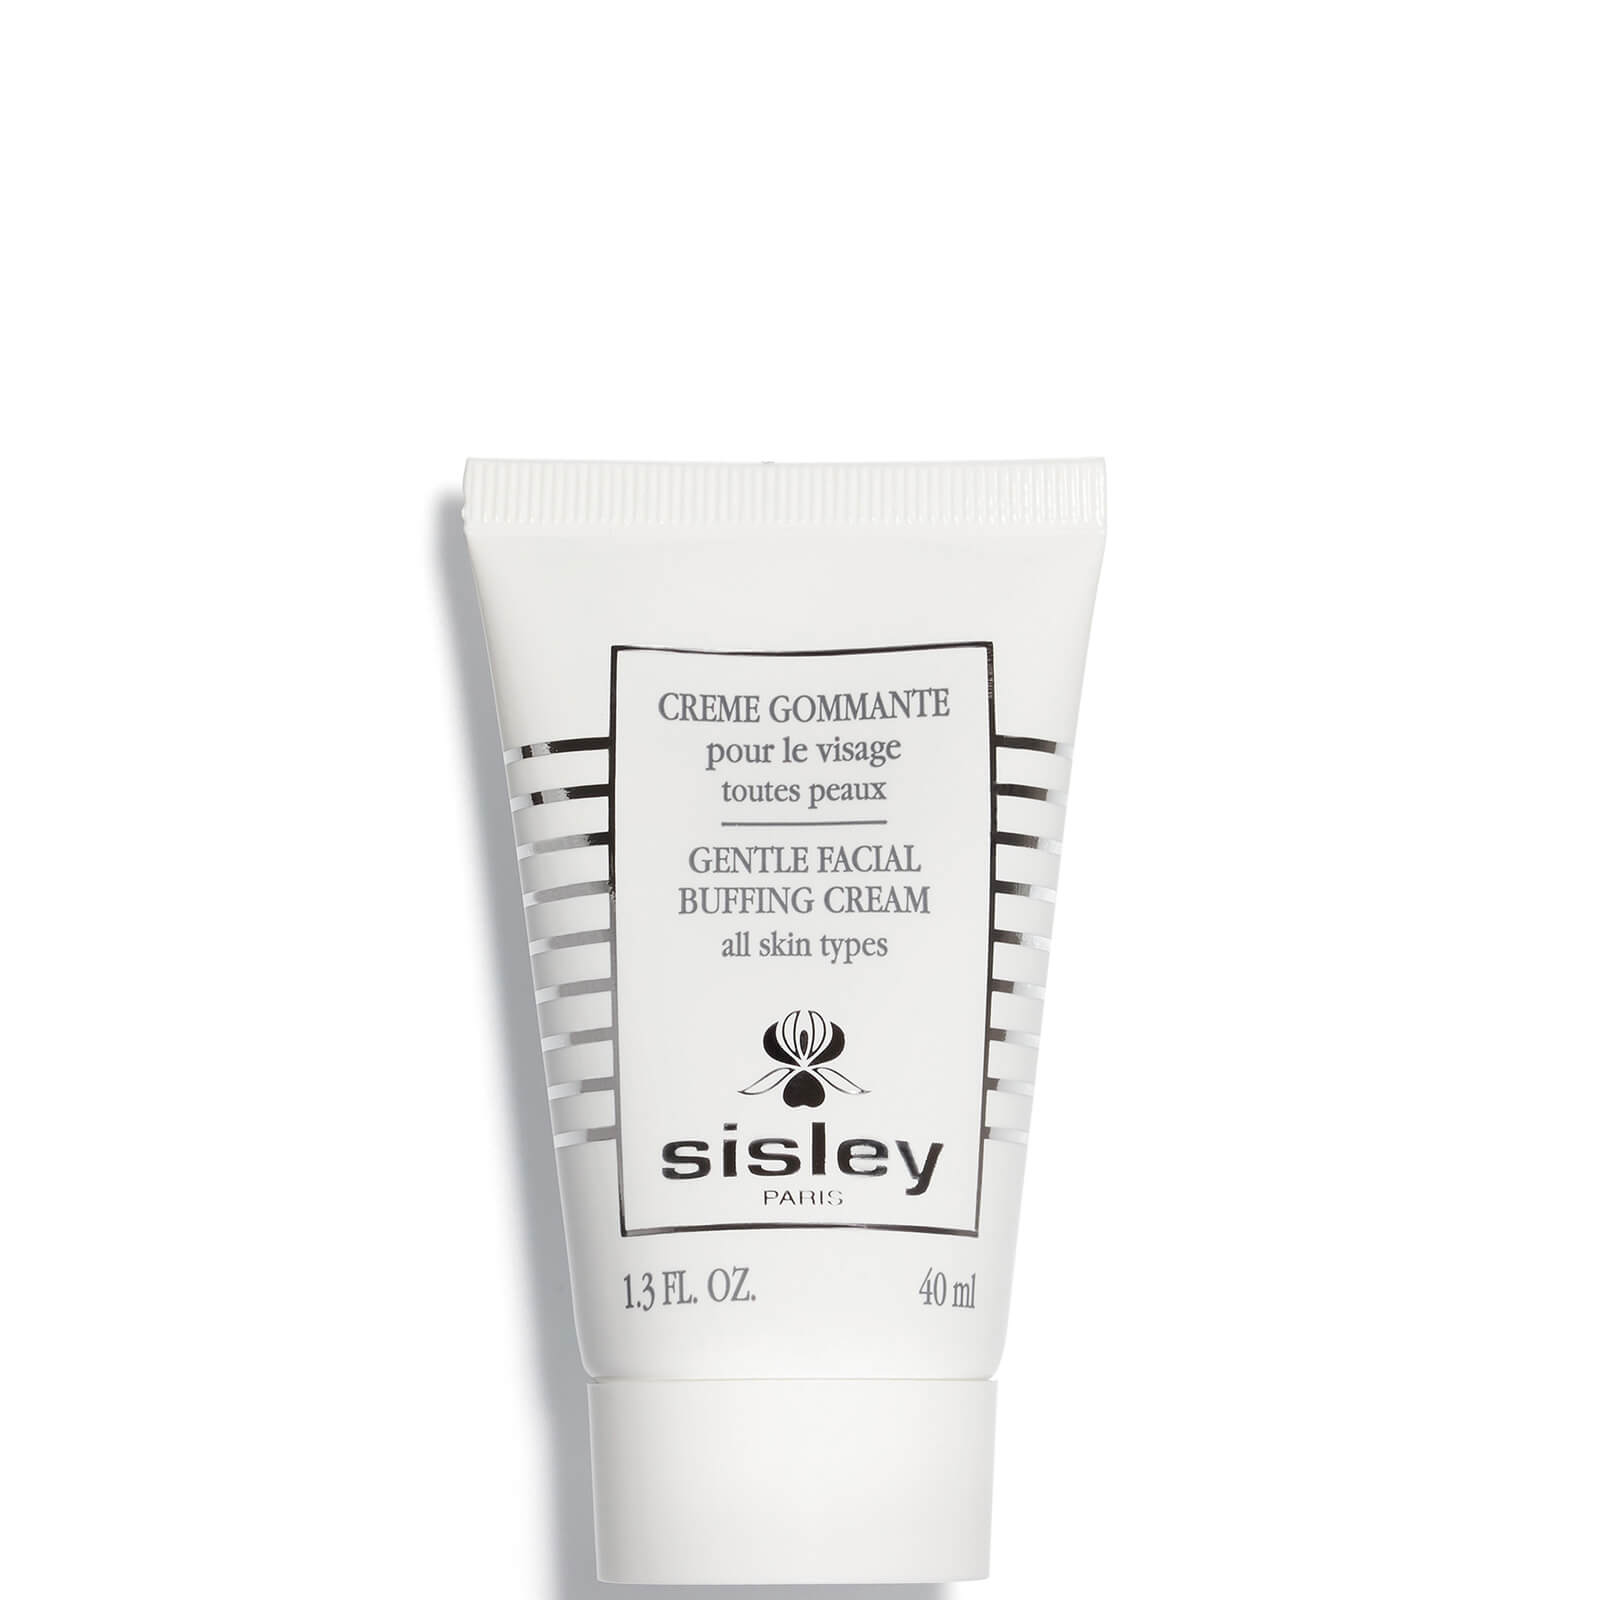 Photos - Facial / Body Cleansing Product Sisley PARIS Gentle Facial Buffing Cream Tube 40ml 